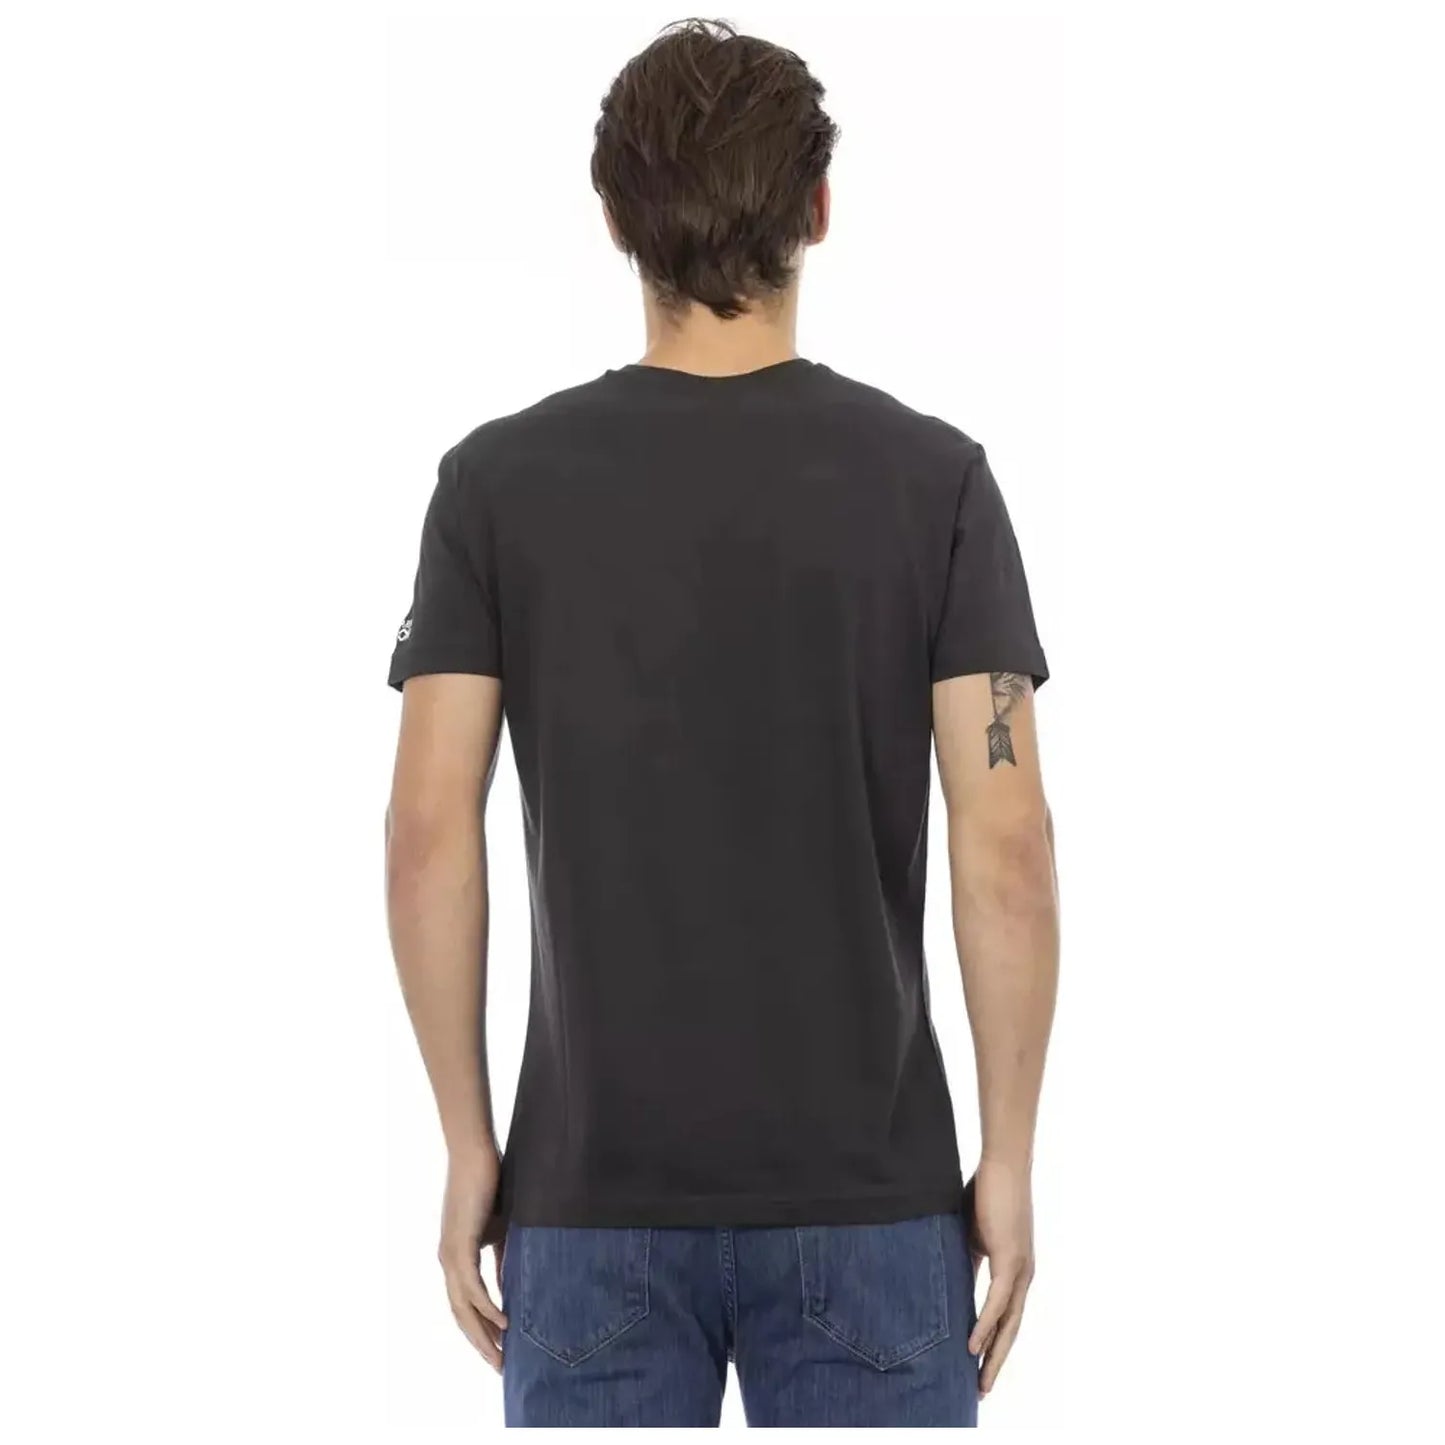 Trussardi Action Sleek V-Neck Tee with Front Print black-cotton-t-shirt-40